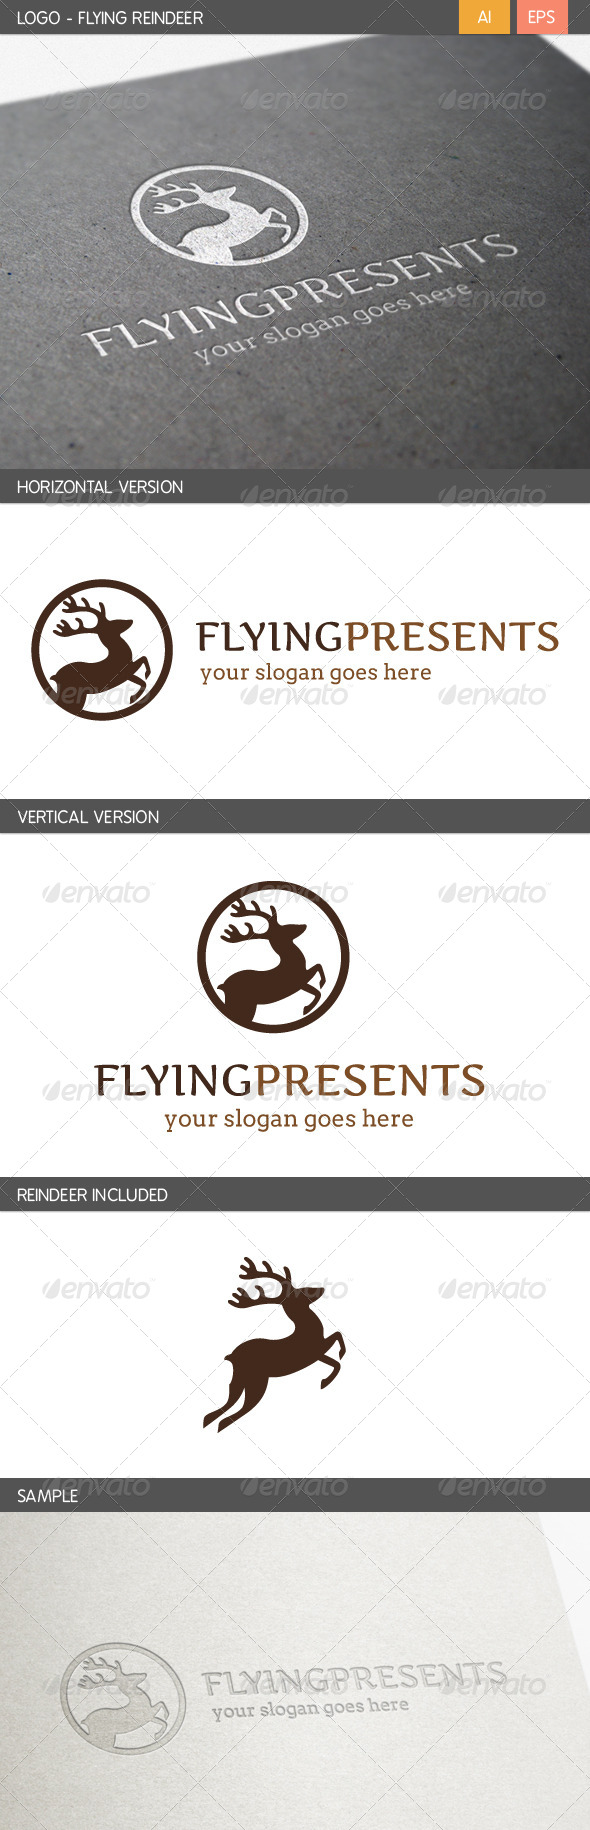 Flying Reindeer Logo